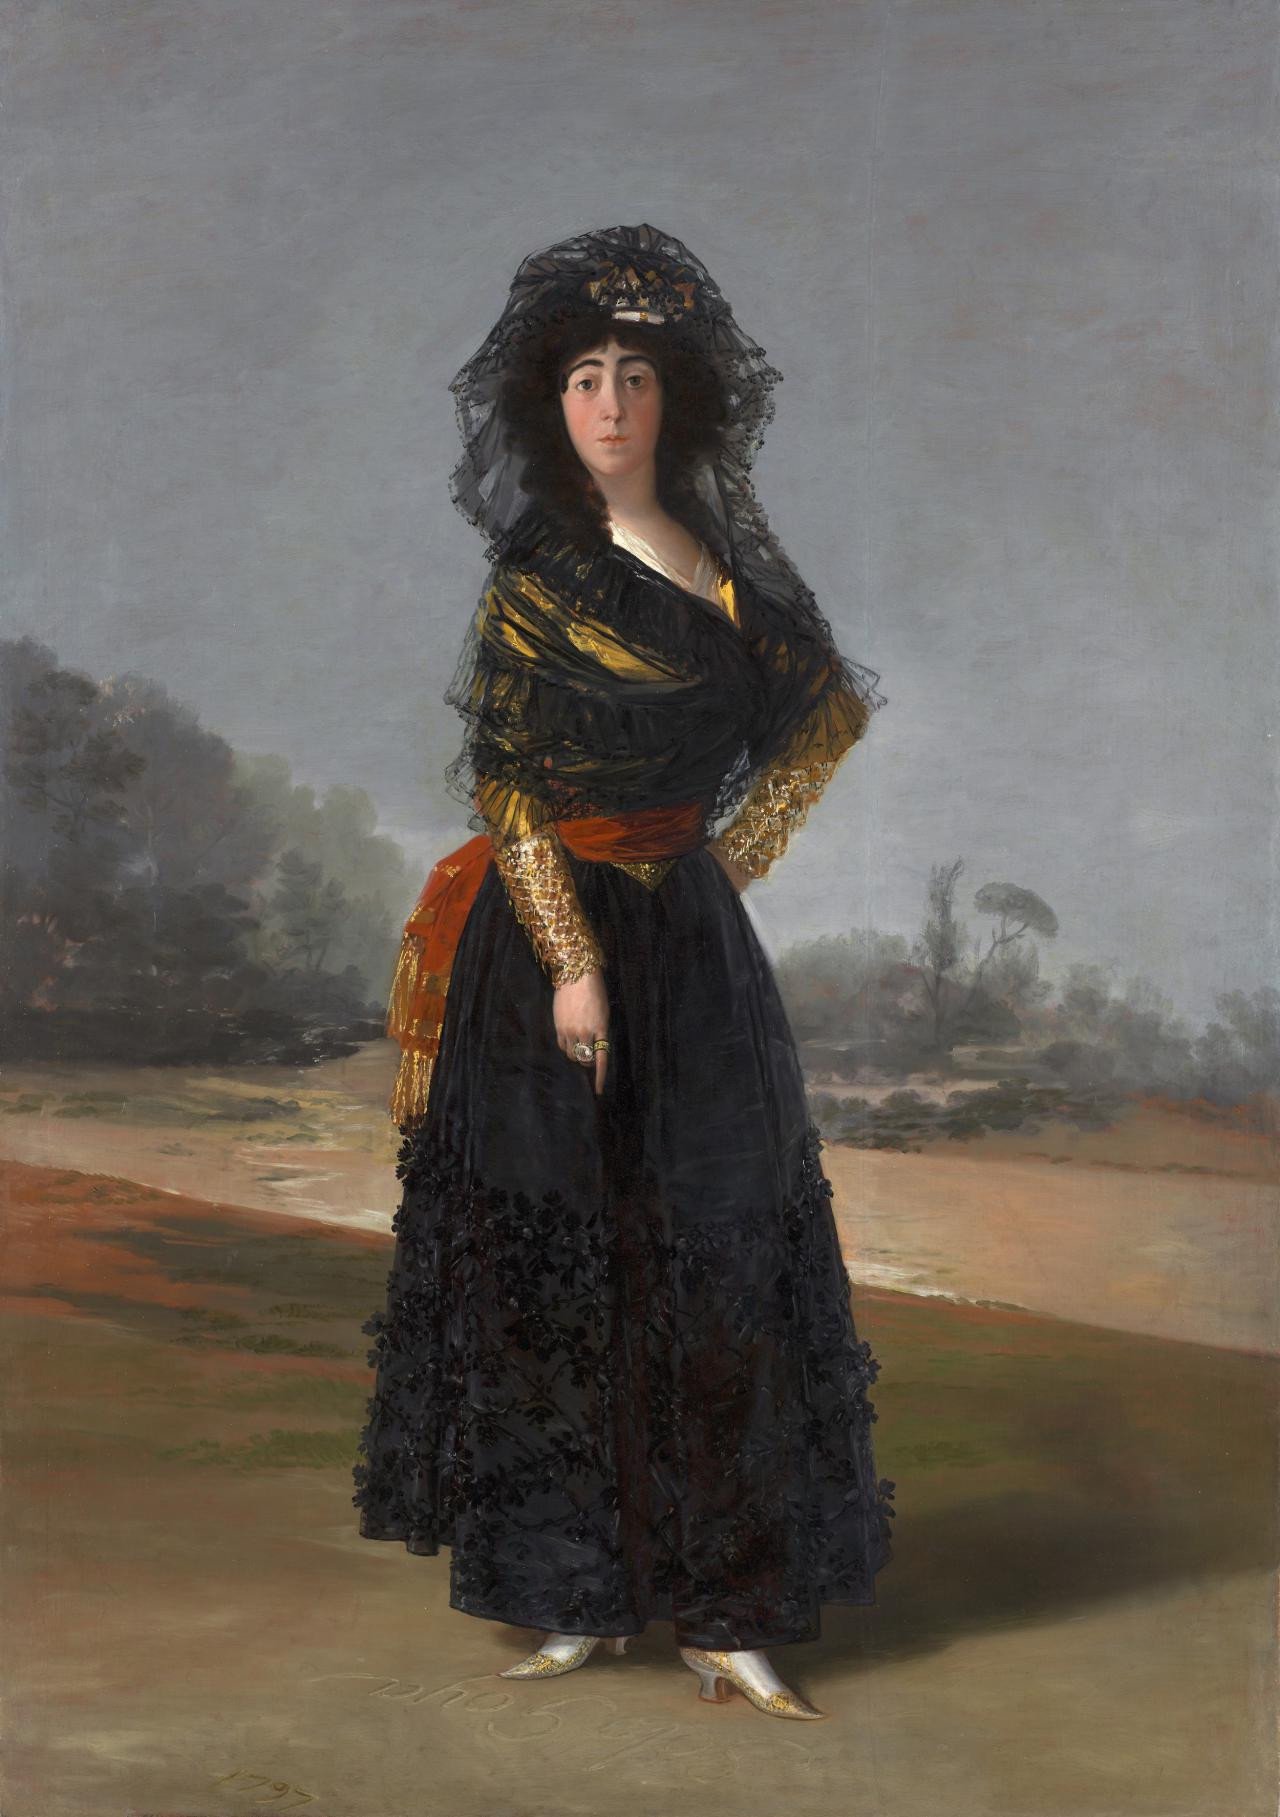 Księżna z rodu Alba by Francisco Goya - 1797 - 210 x 148 cm 